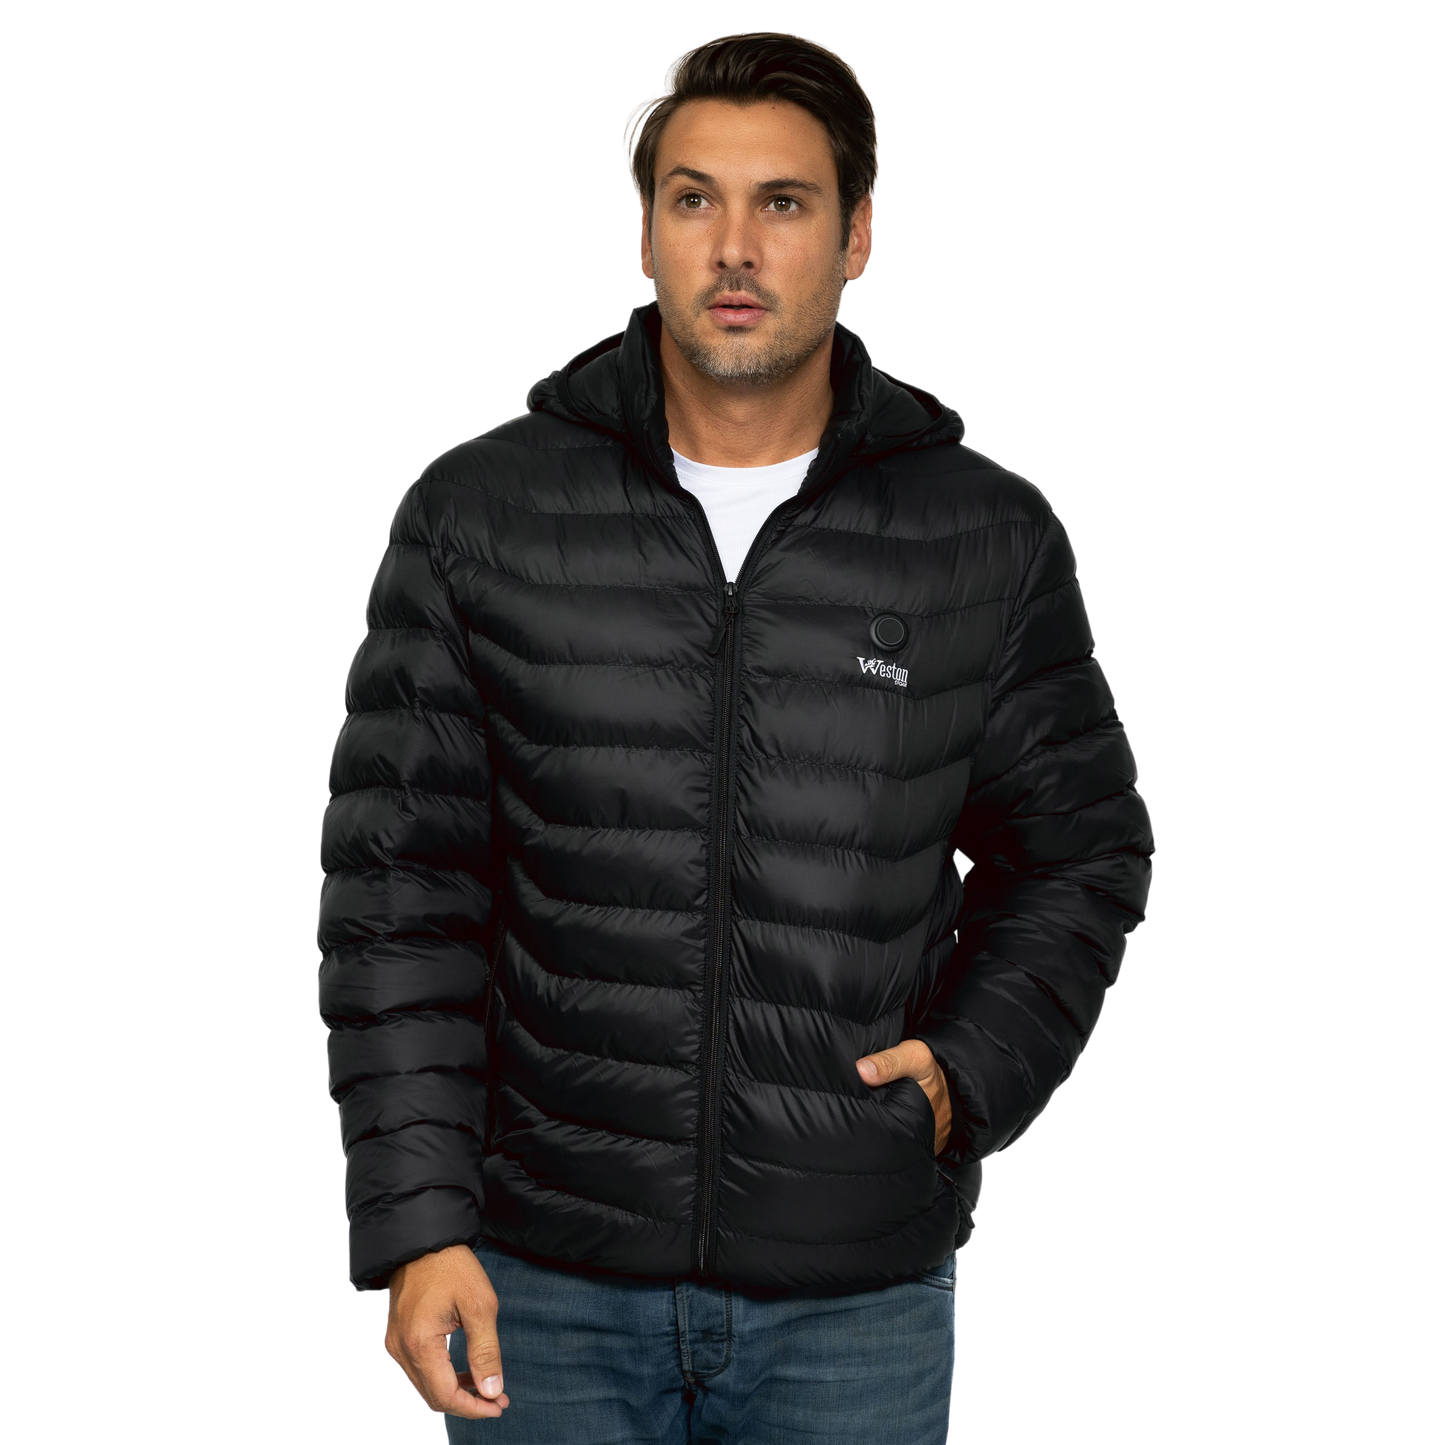 Men's upgraded heated jacket 7.4V – Weston Store